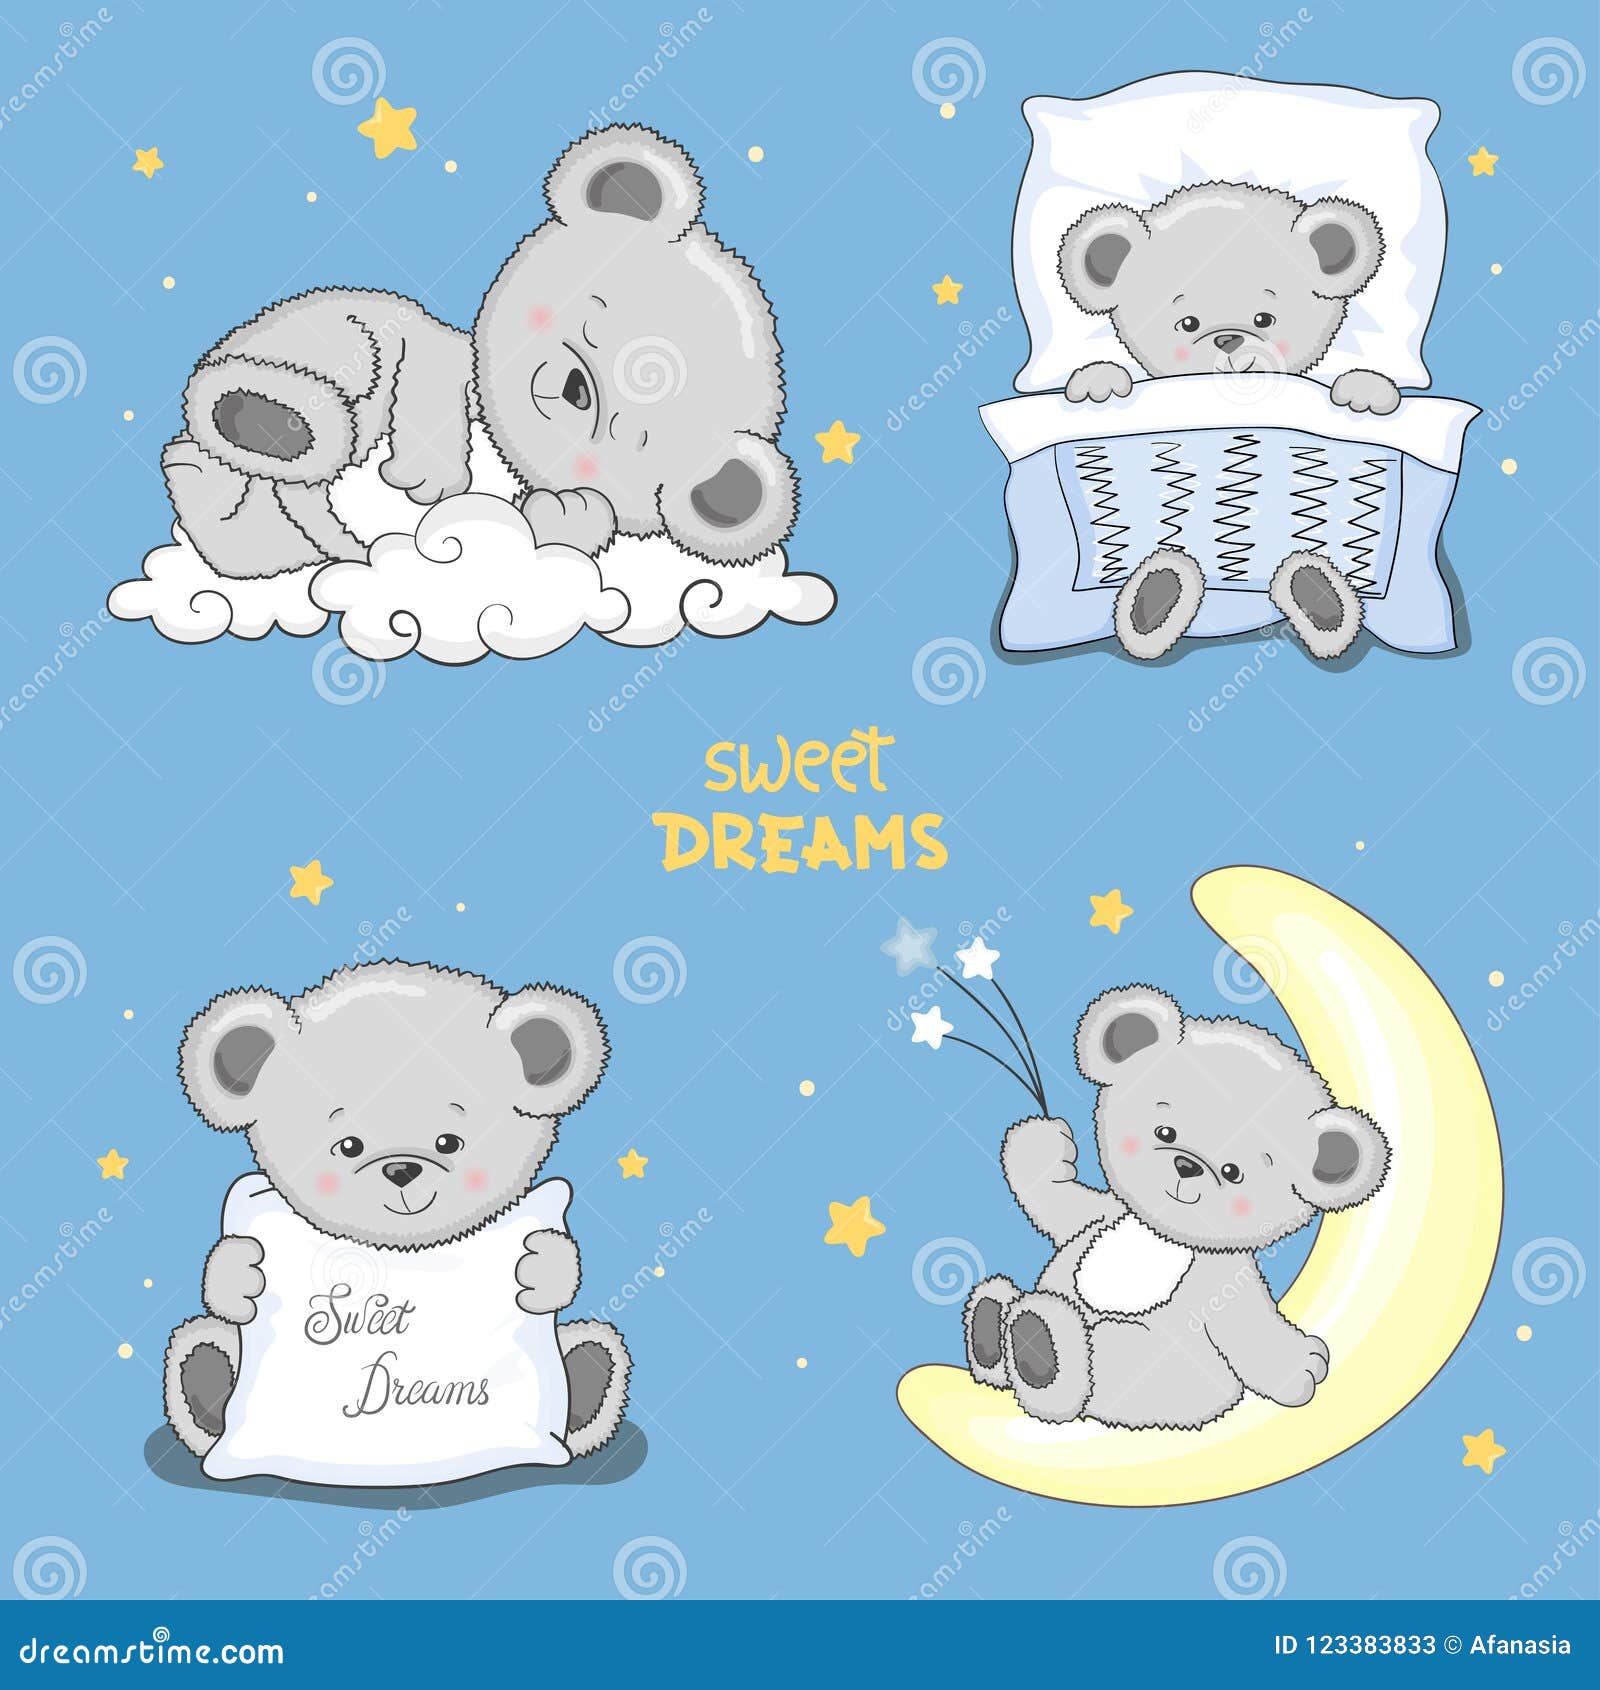 Sweet Dreams Set With Cute Sleeping Teddy Bears Stock Vector